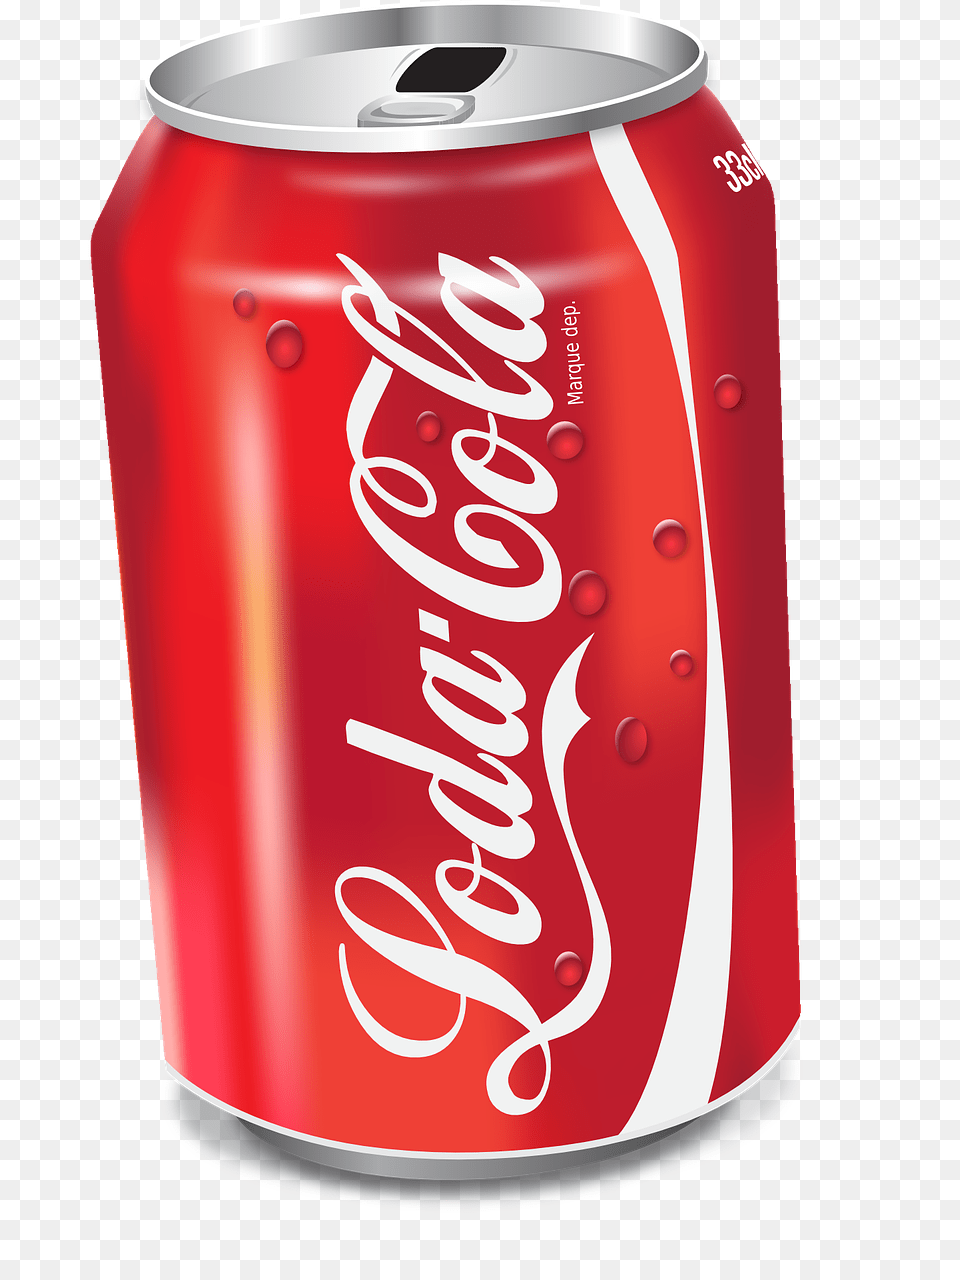 Coca Cola Soda Free Vector Graphic On Pixabay Transparent Coca Cola Cartoon, Beverage, Coke, Can, Tin Png Image